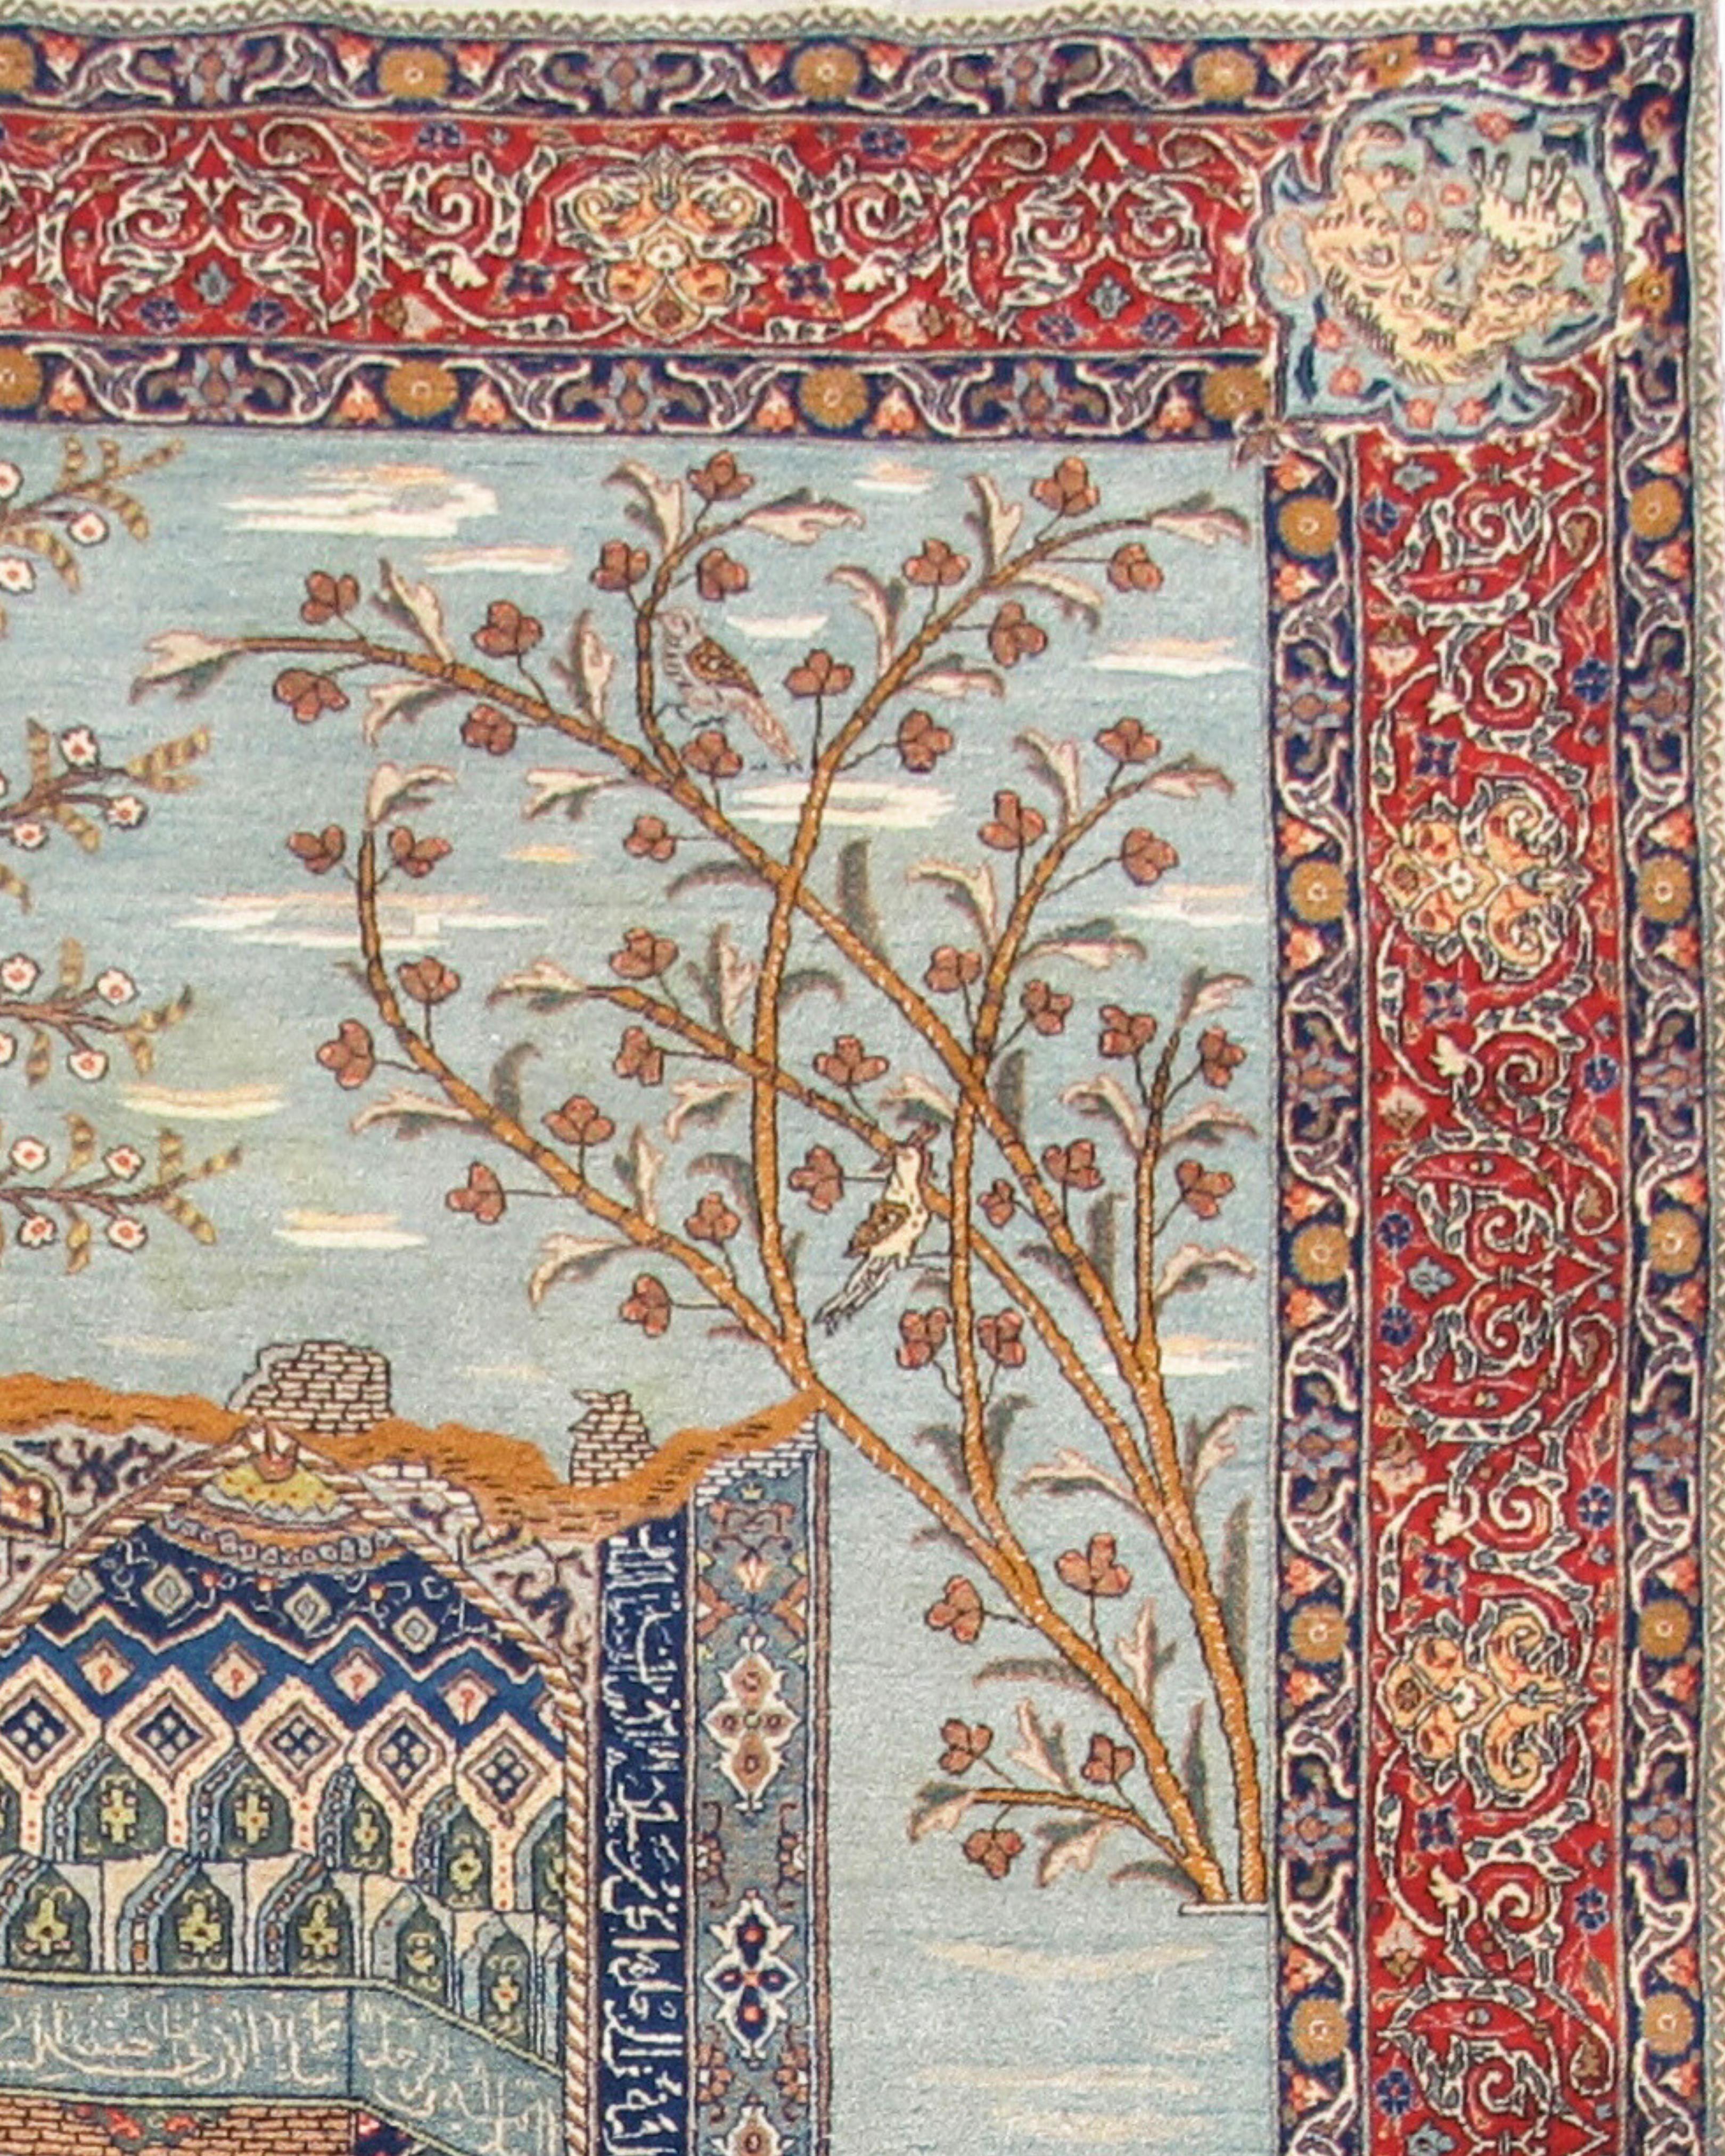 Tapis pictural persan de Tabriz, vers 1960

Informations supplémentaires :
Dimensions : 8'4